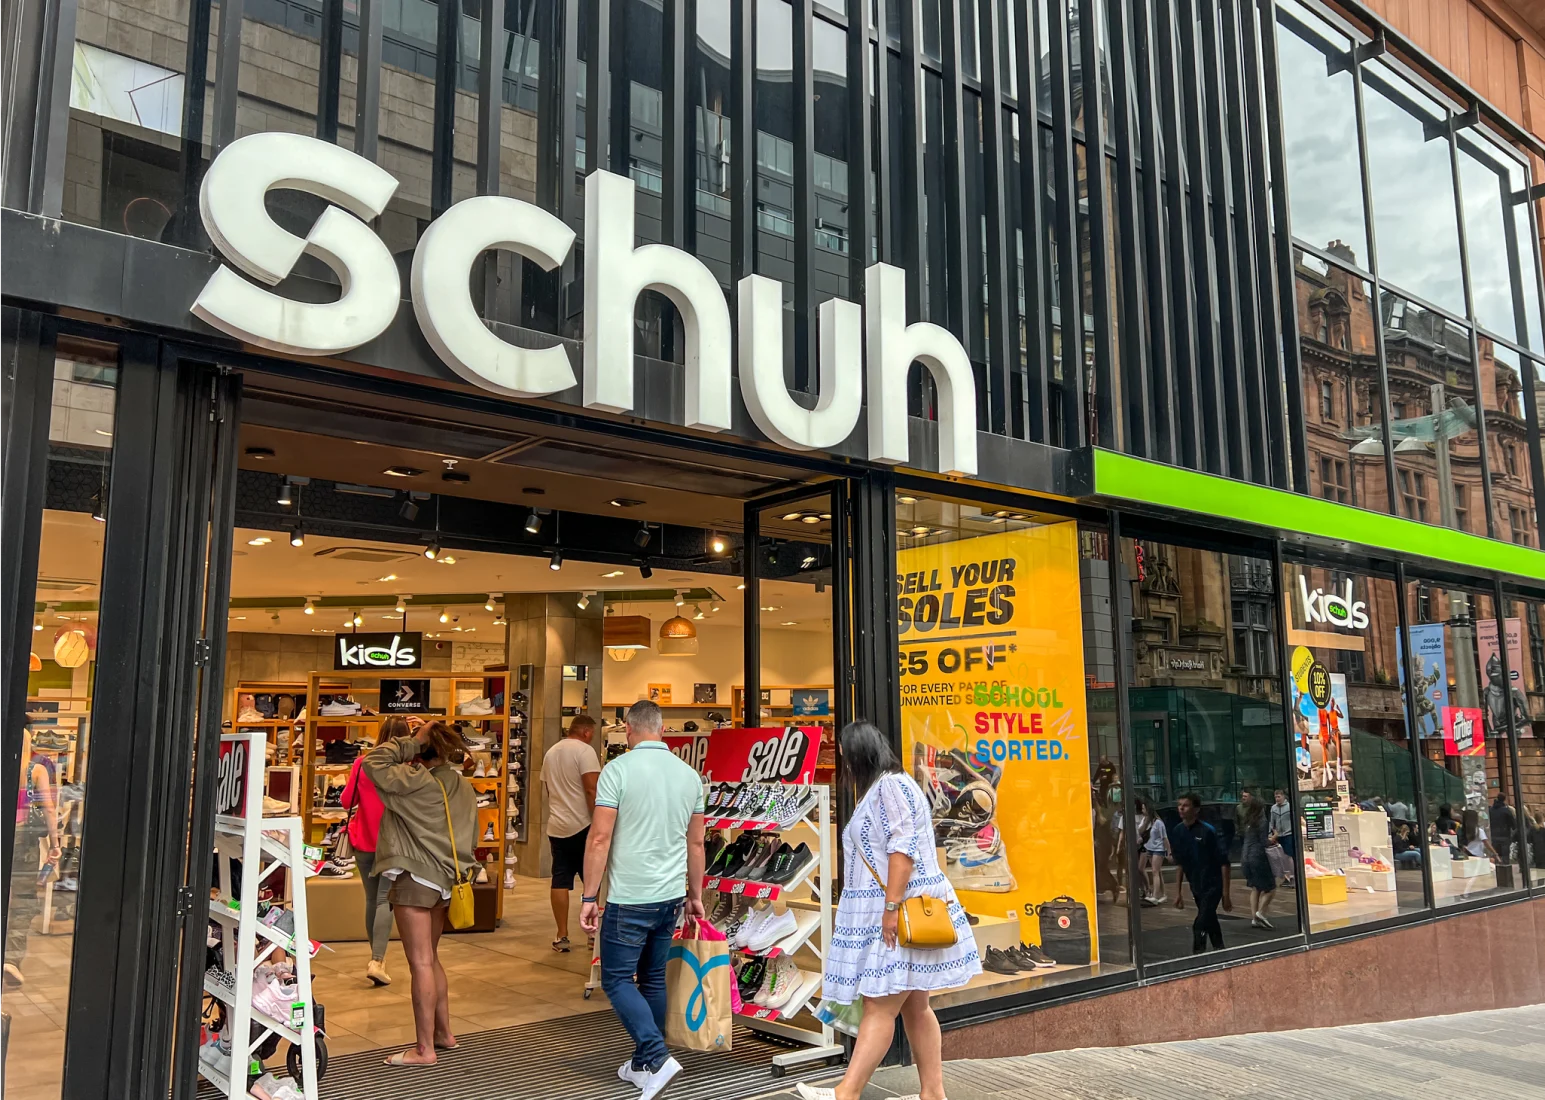 Schuh returns store